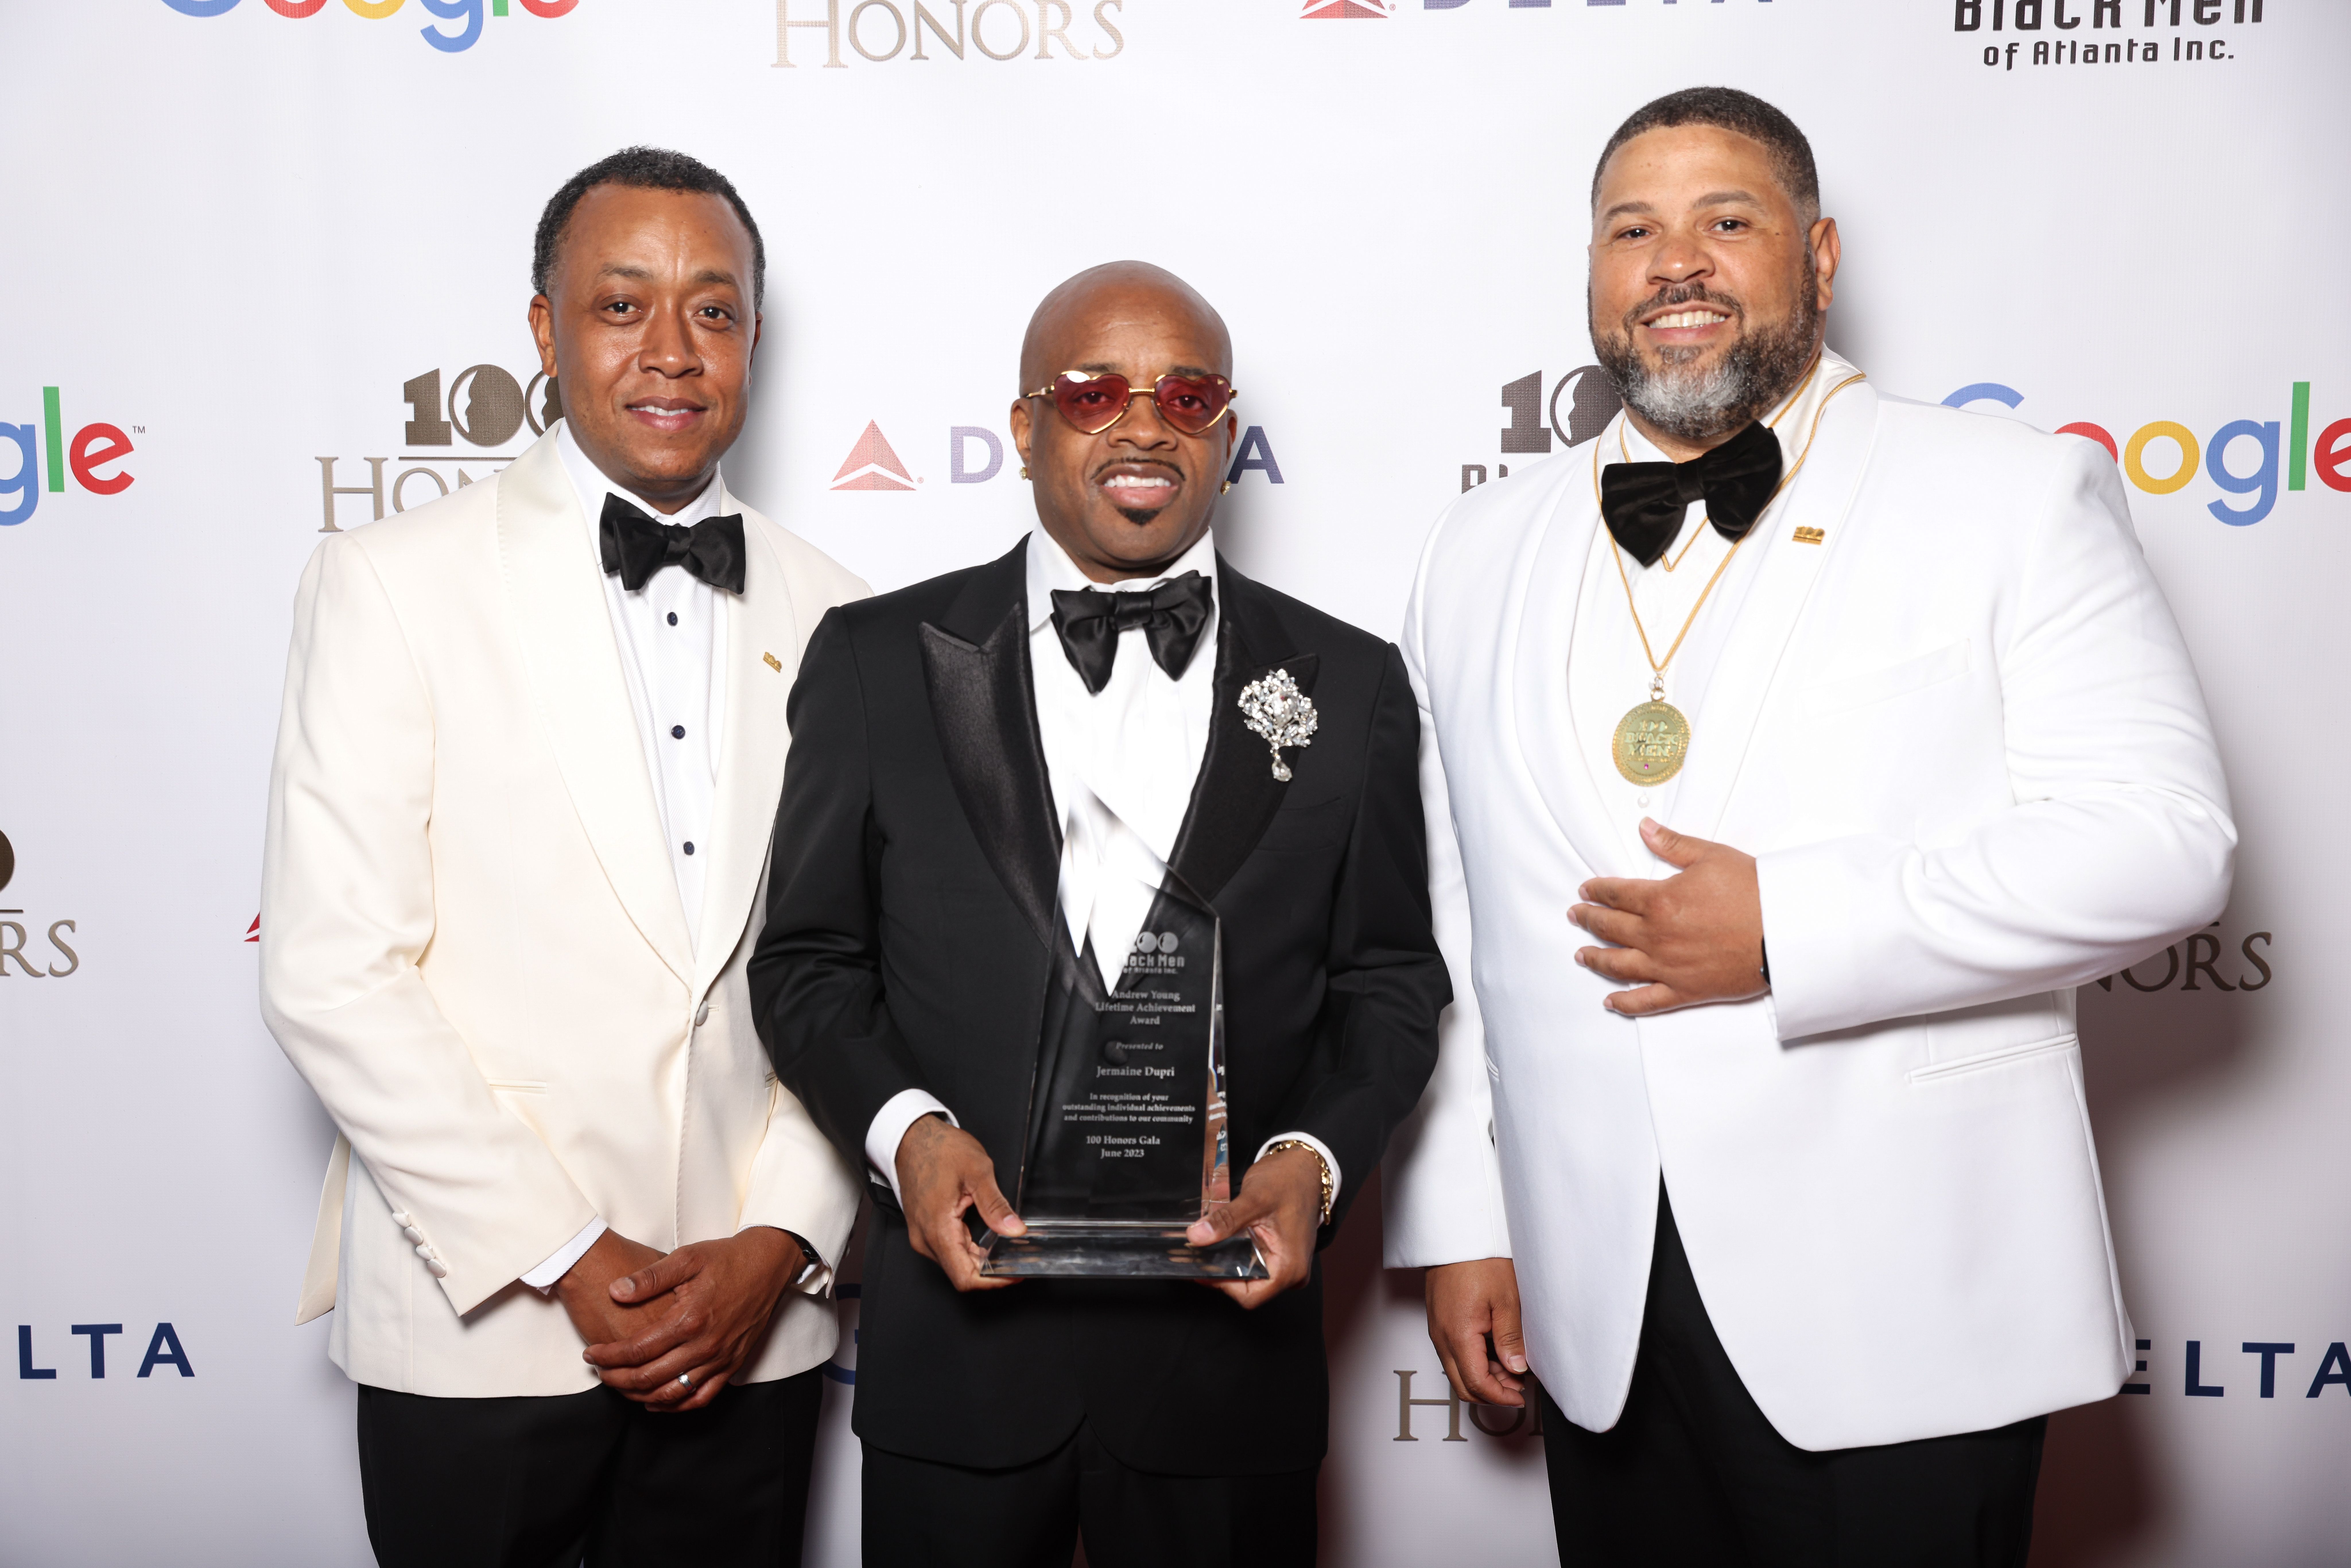 100 Black Men of Atlanta's Honors Gala Paid Tribute to Leaders